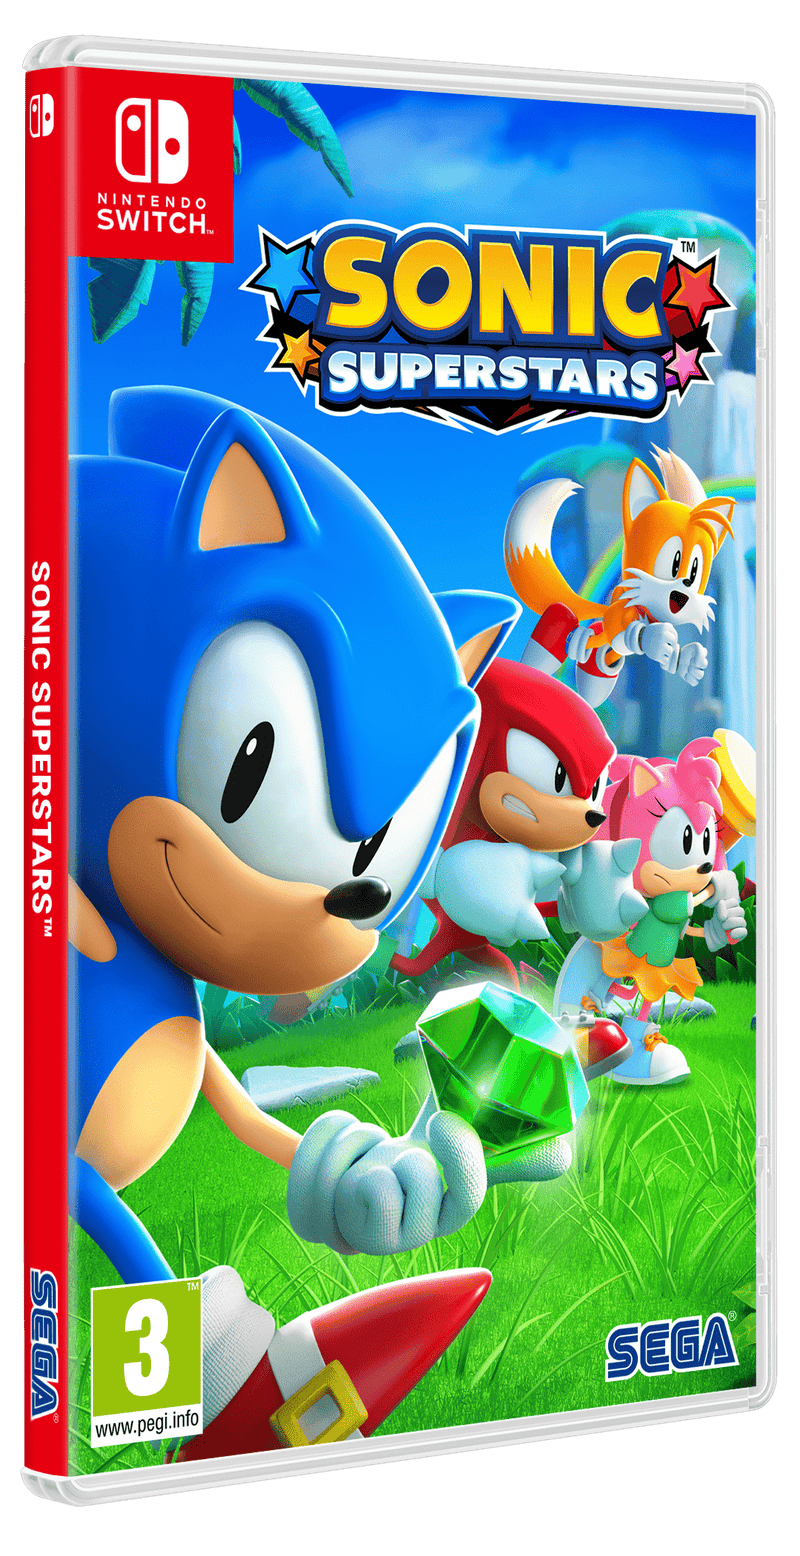  Sonic Frontiers - Nintendo Switch : Sega of America